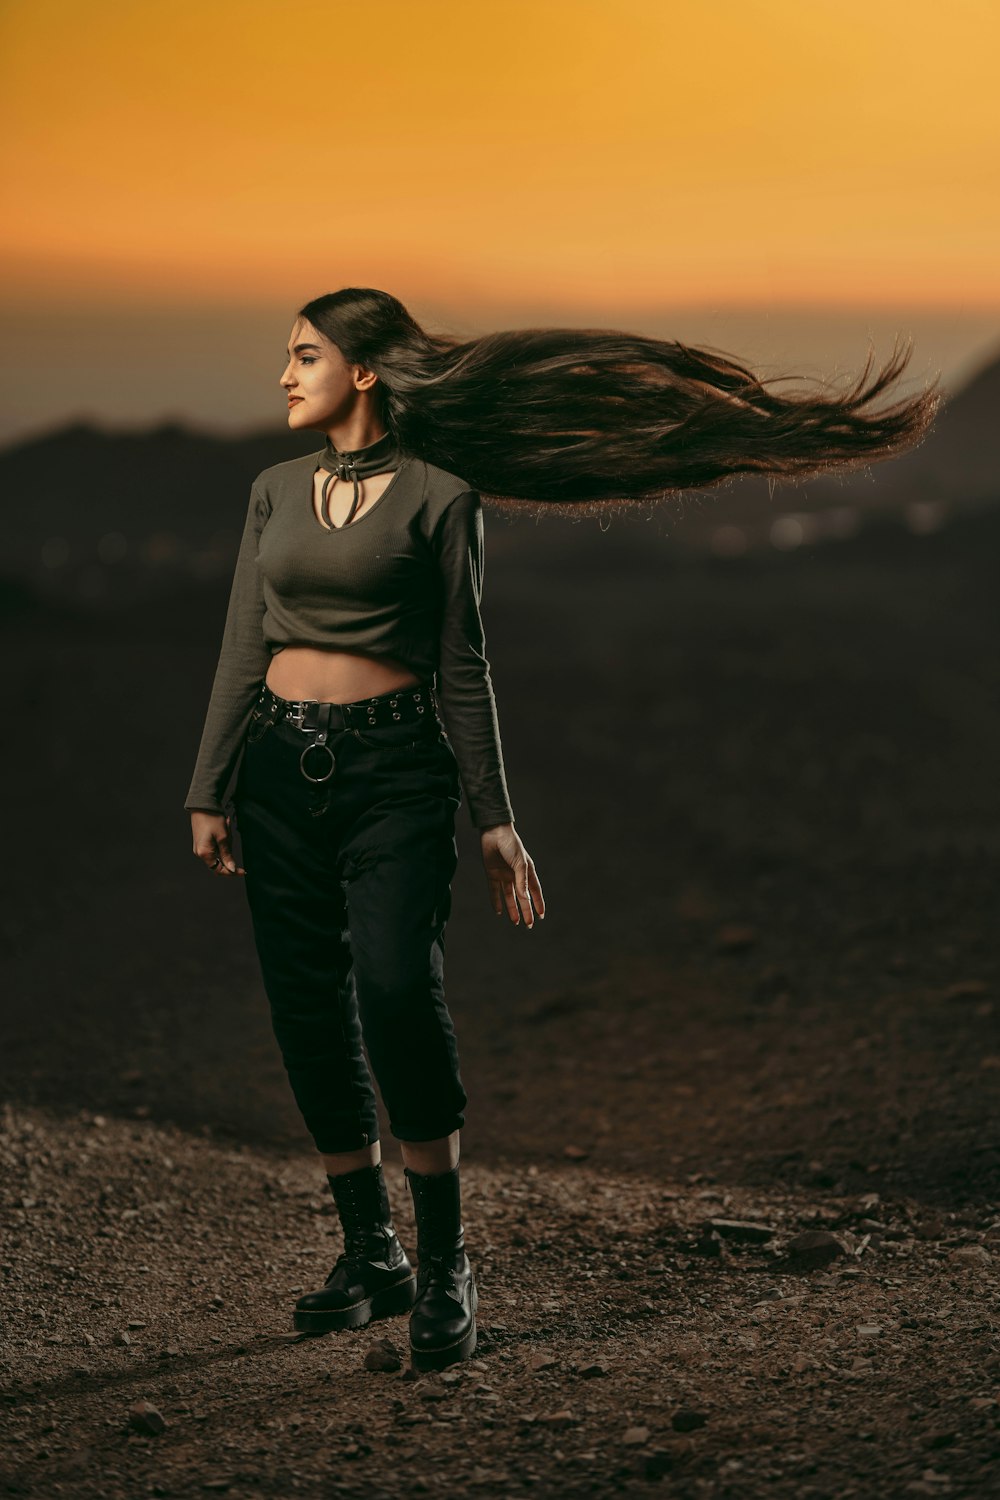 a woman with long hair walking down a dirt road